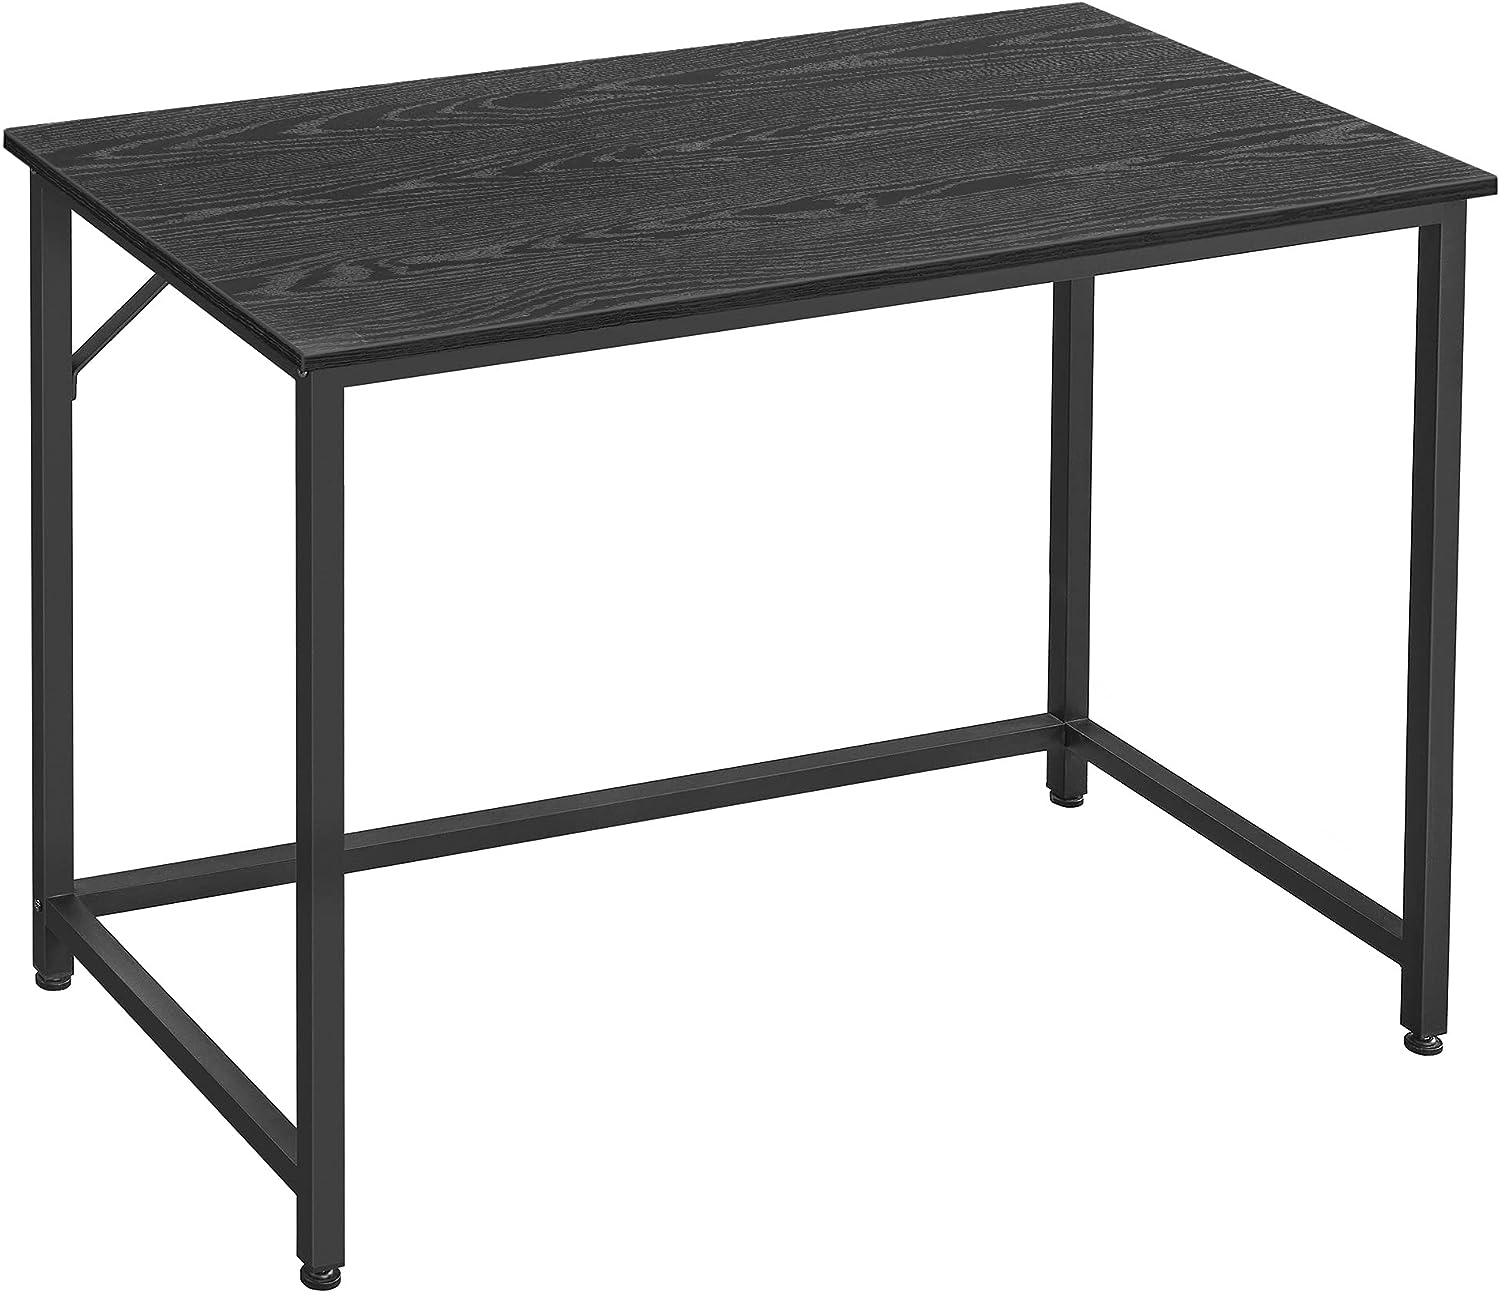 VASAGLE skrivebord, rektangulær - sort spånplade og sort stål (100x50)